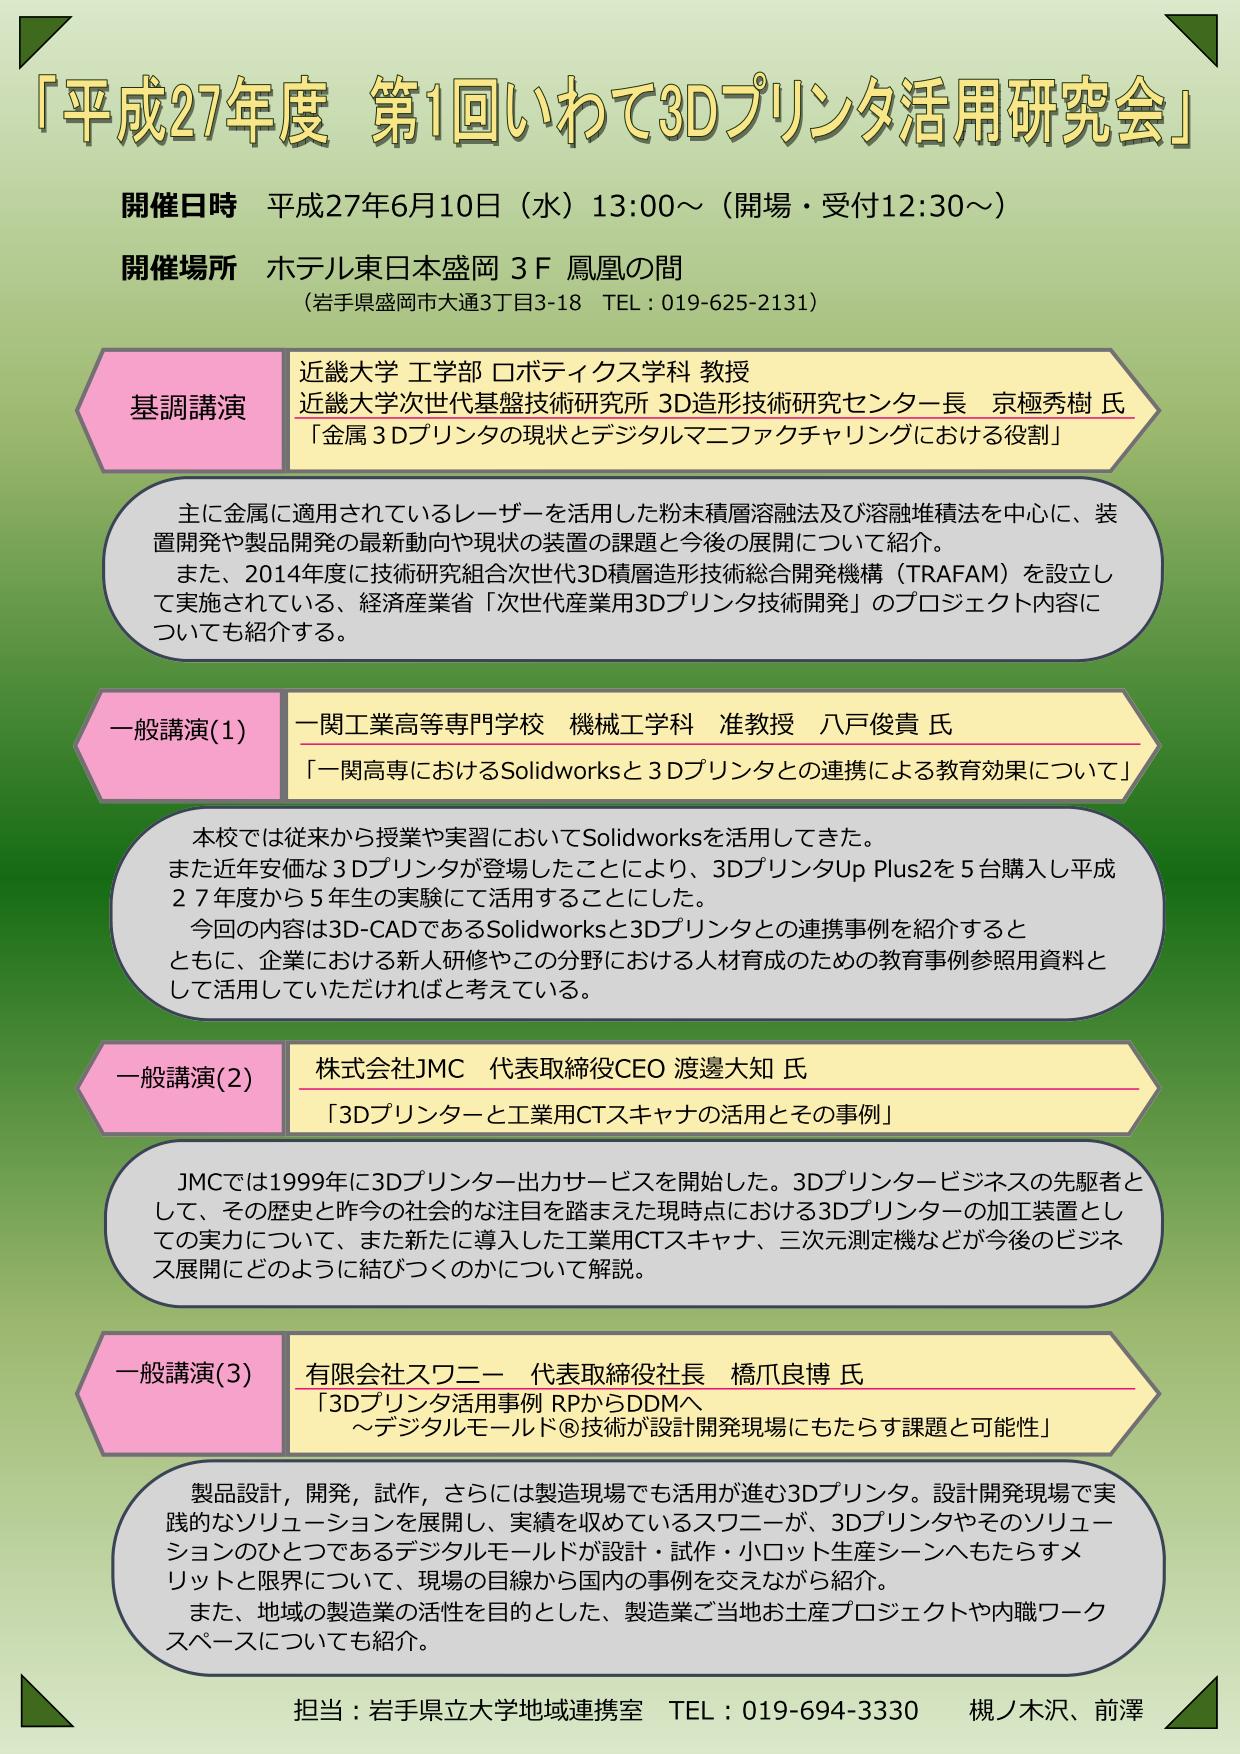 http://www.iwate-pu.ac.jp/contribution/%E7%A0%94%E7%A9%B6%E4%BC%9A%E3%83%81%E3%83%A9%E3%82%B7_01.jpg